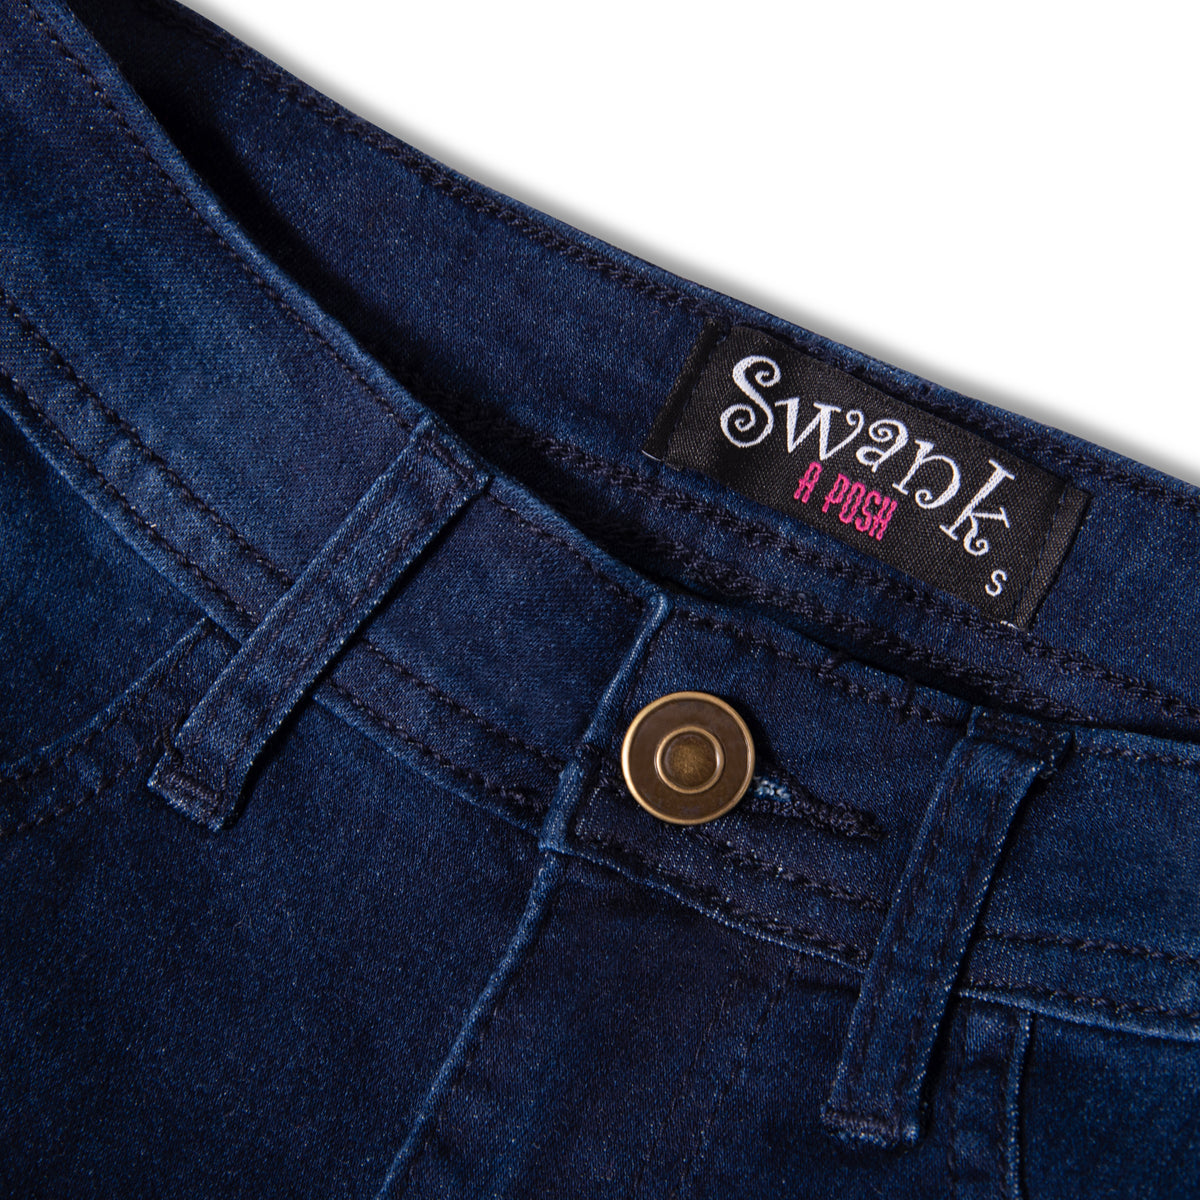 
              Story High Waist Super Stretch Jeans - Dark Wash - Swank A Posh
            